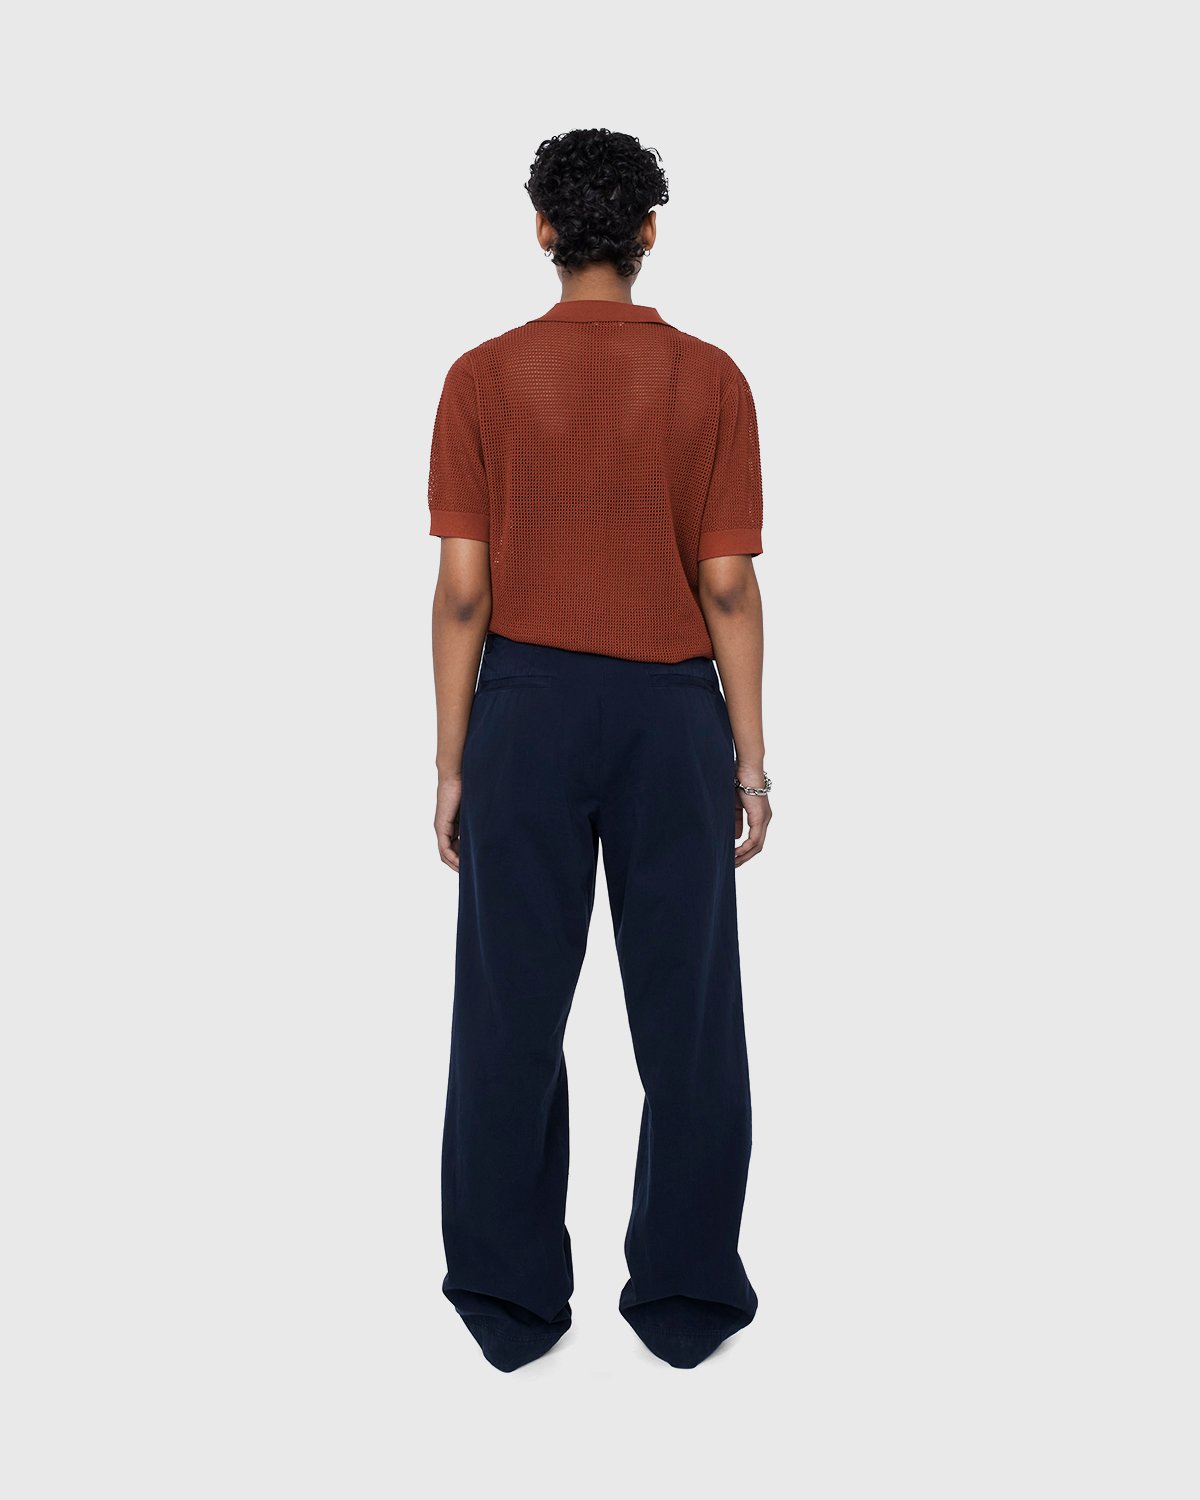 Dries van Noten - Jael Polo Shirt Brique - Clothing - Red - Image 7